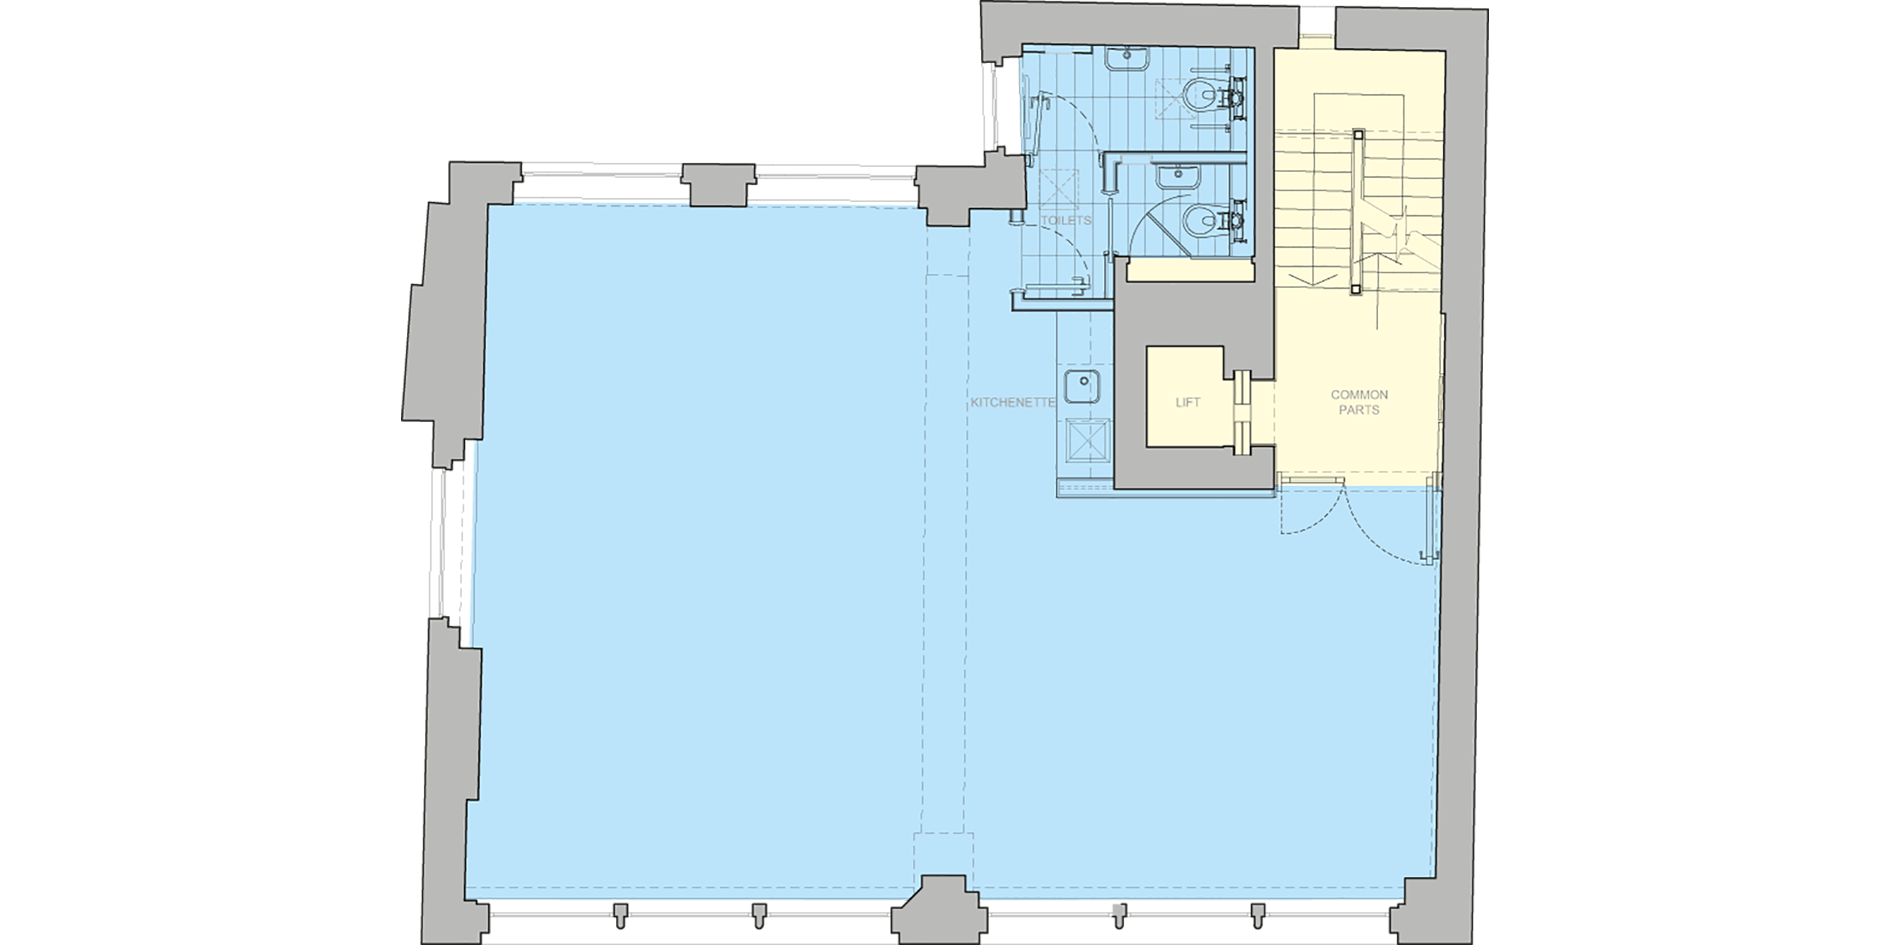 Third floor floorplan